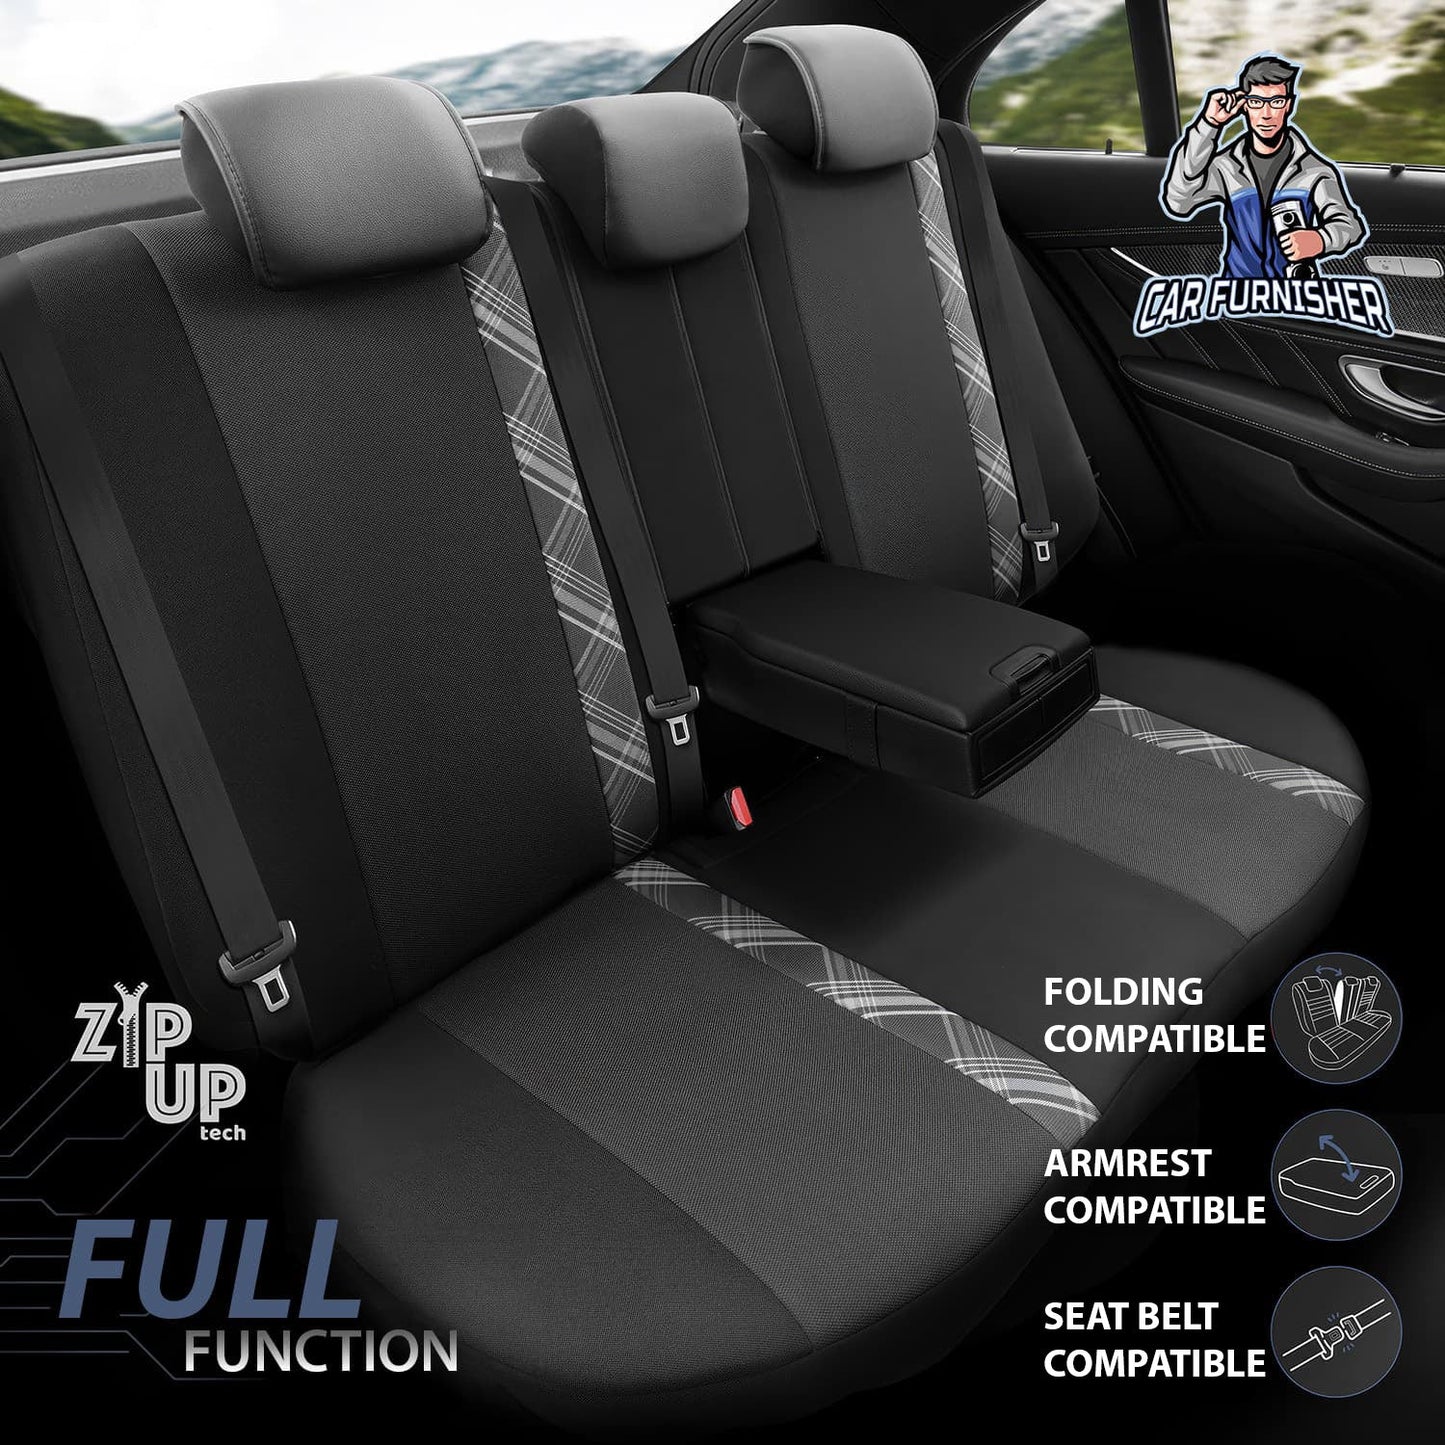 Mercedes 190 Seat Covers Horizon Design Gray 5 Seats + Headrests (Full Set) Leather & Jacquard Fabric